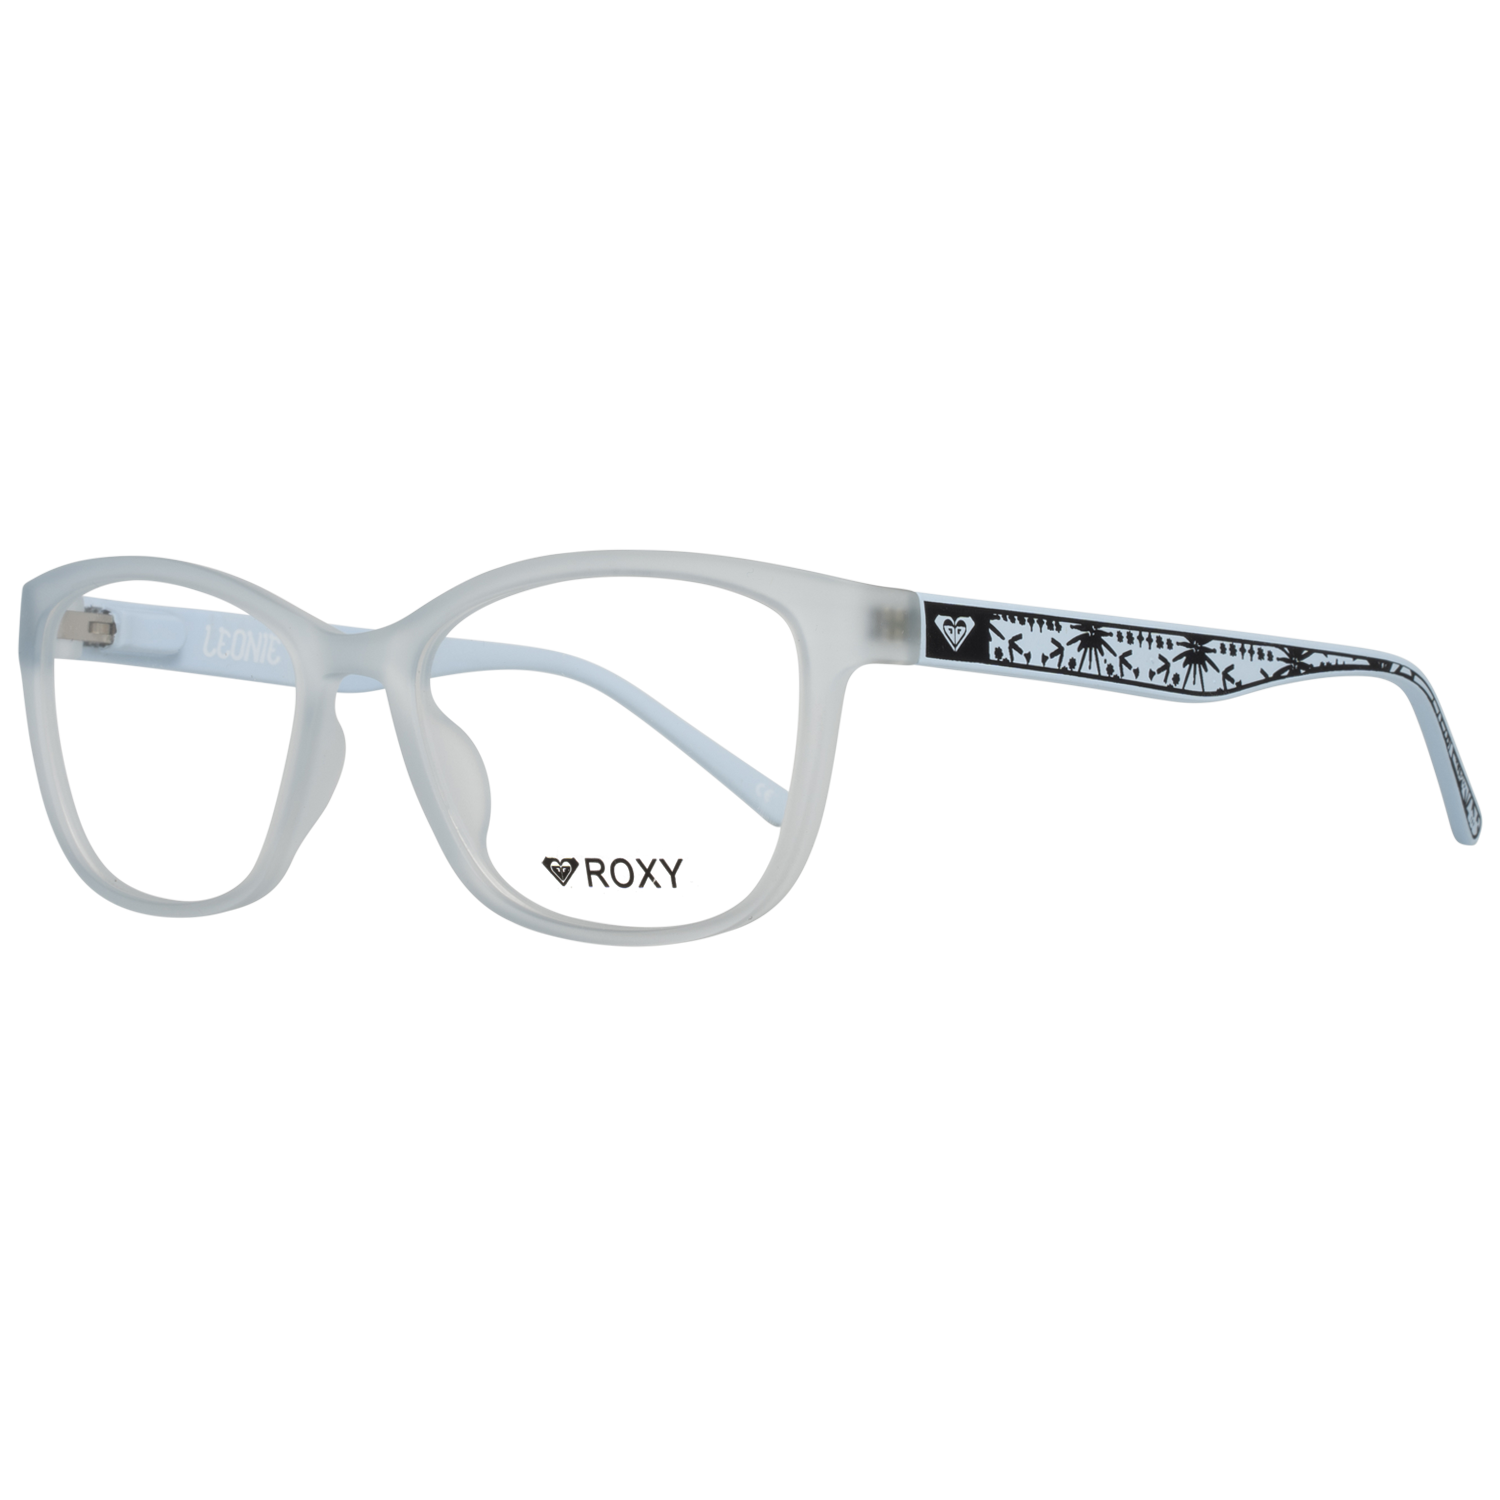 Roxy Frames Roxy Glasses Optical Frame ERJEG03050 ABLU 53 Eyeglasses Eyewear UK USA Australia 